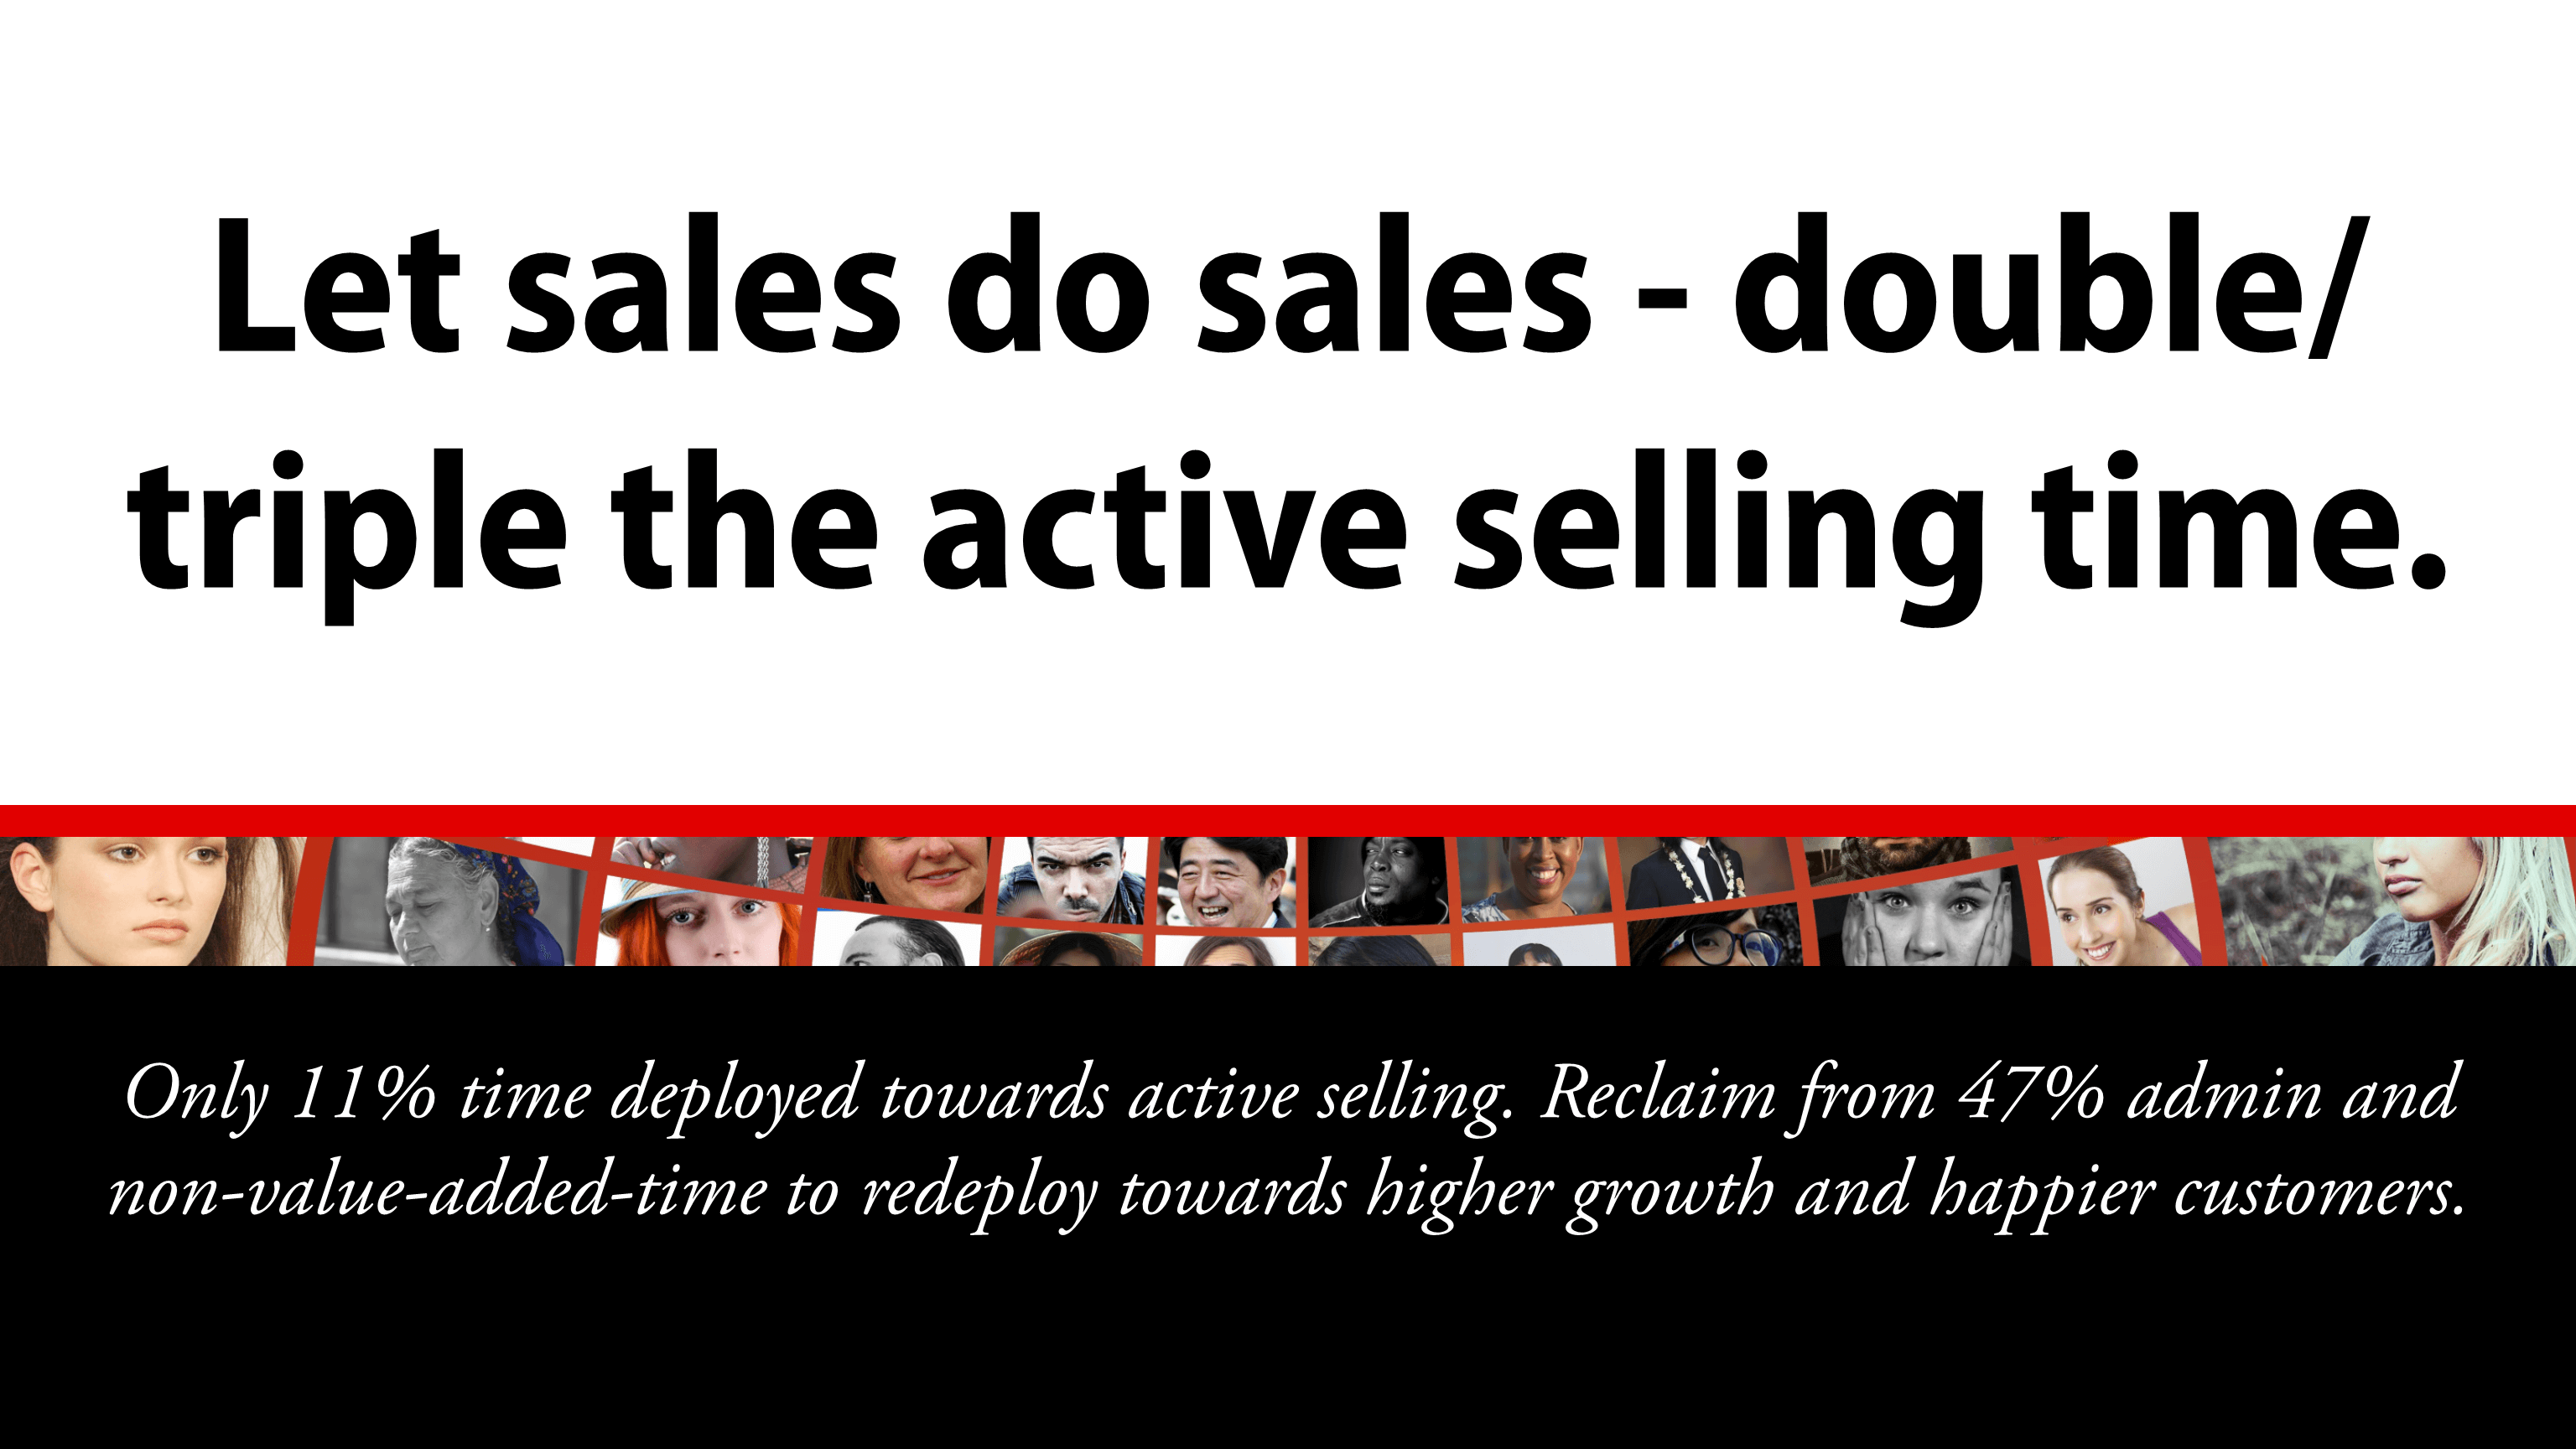 Let sales do sales